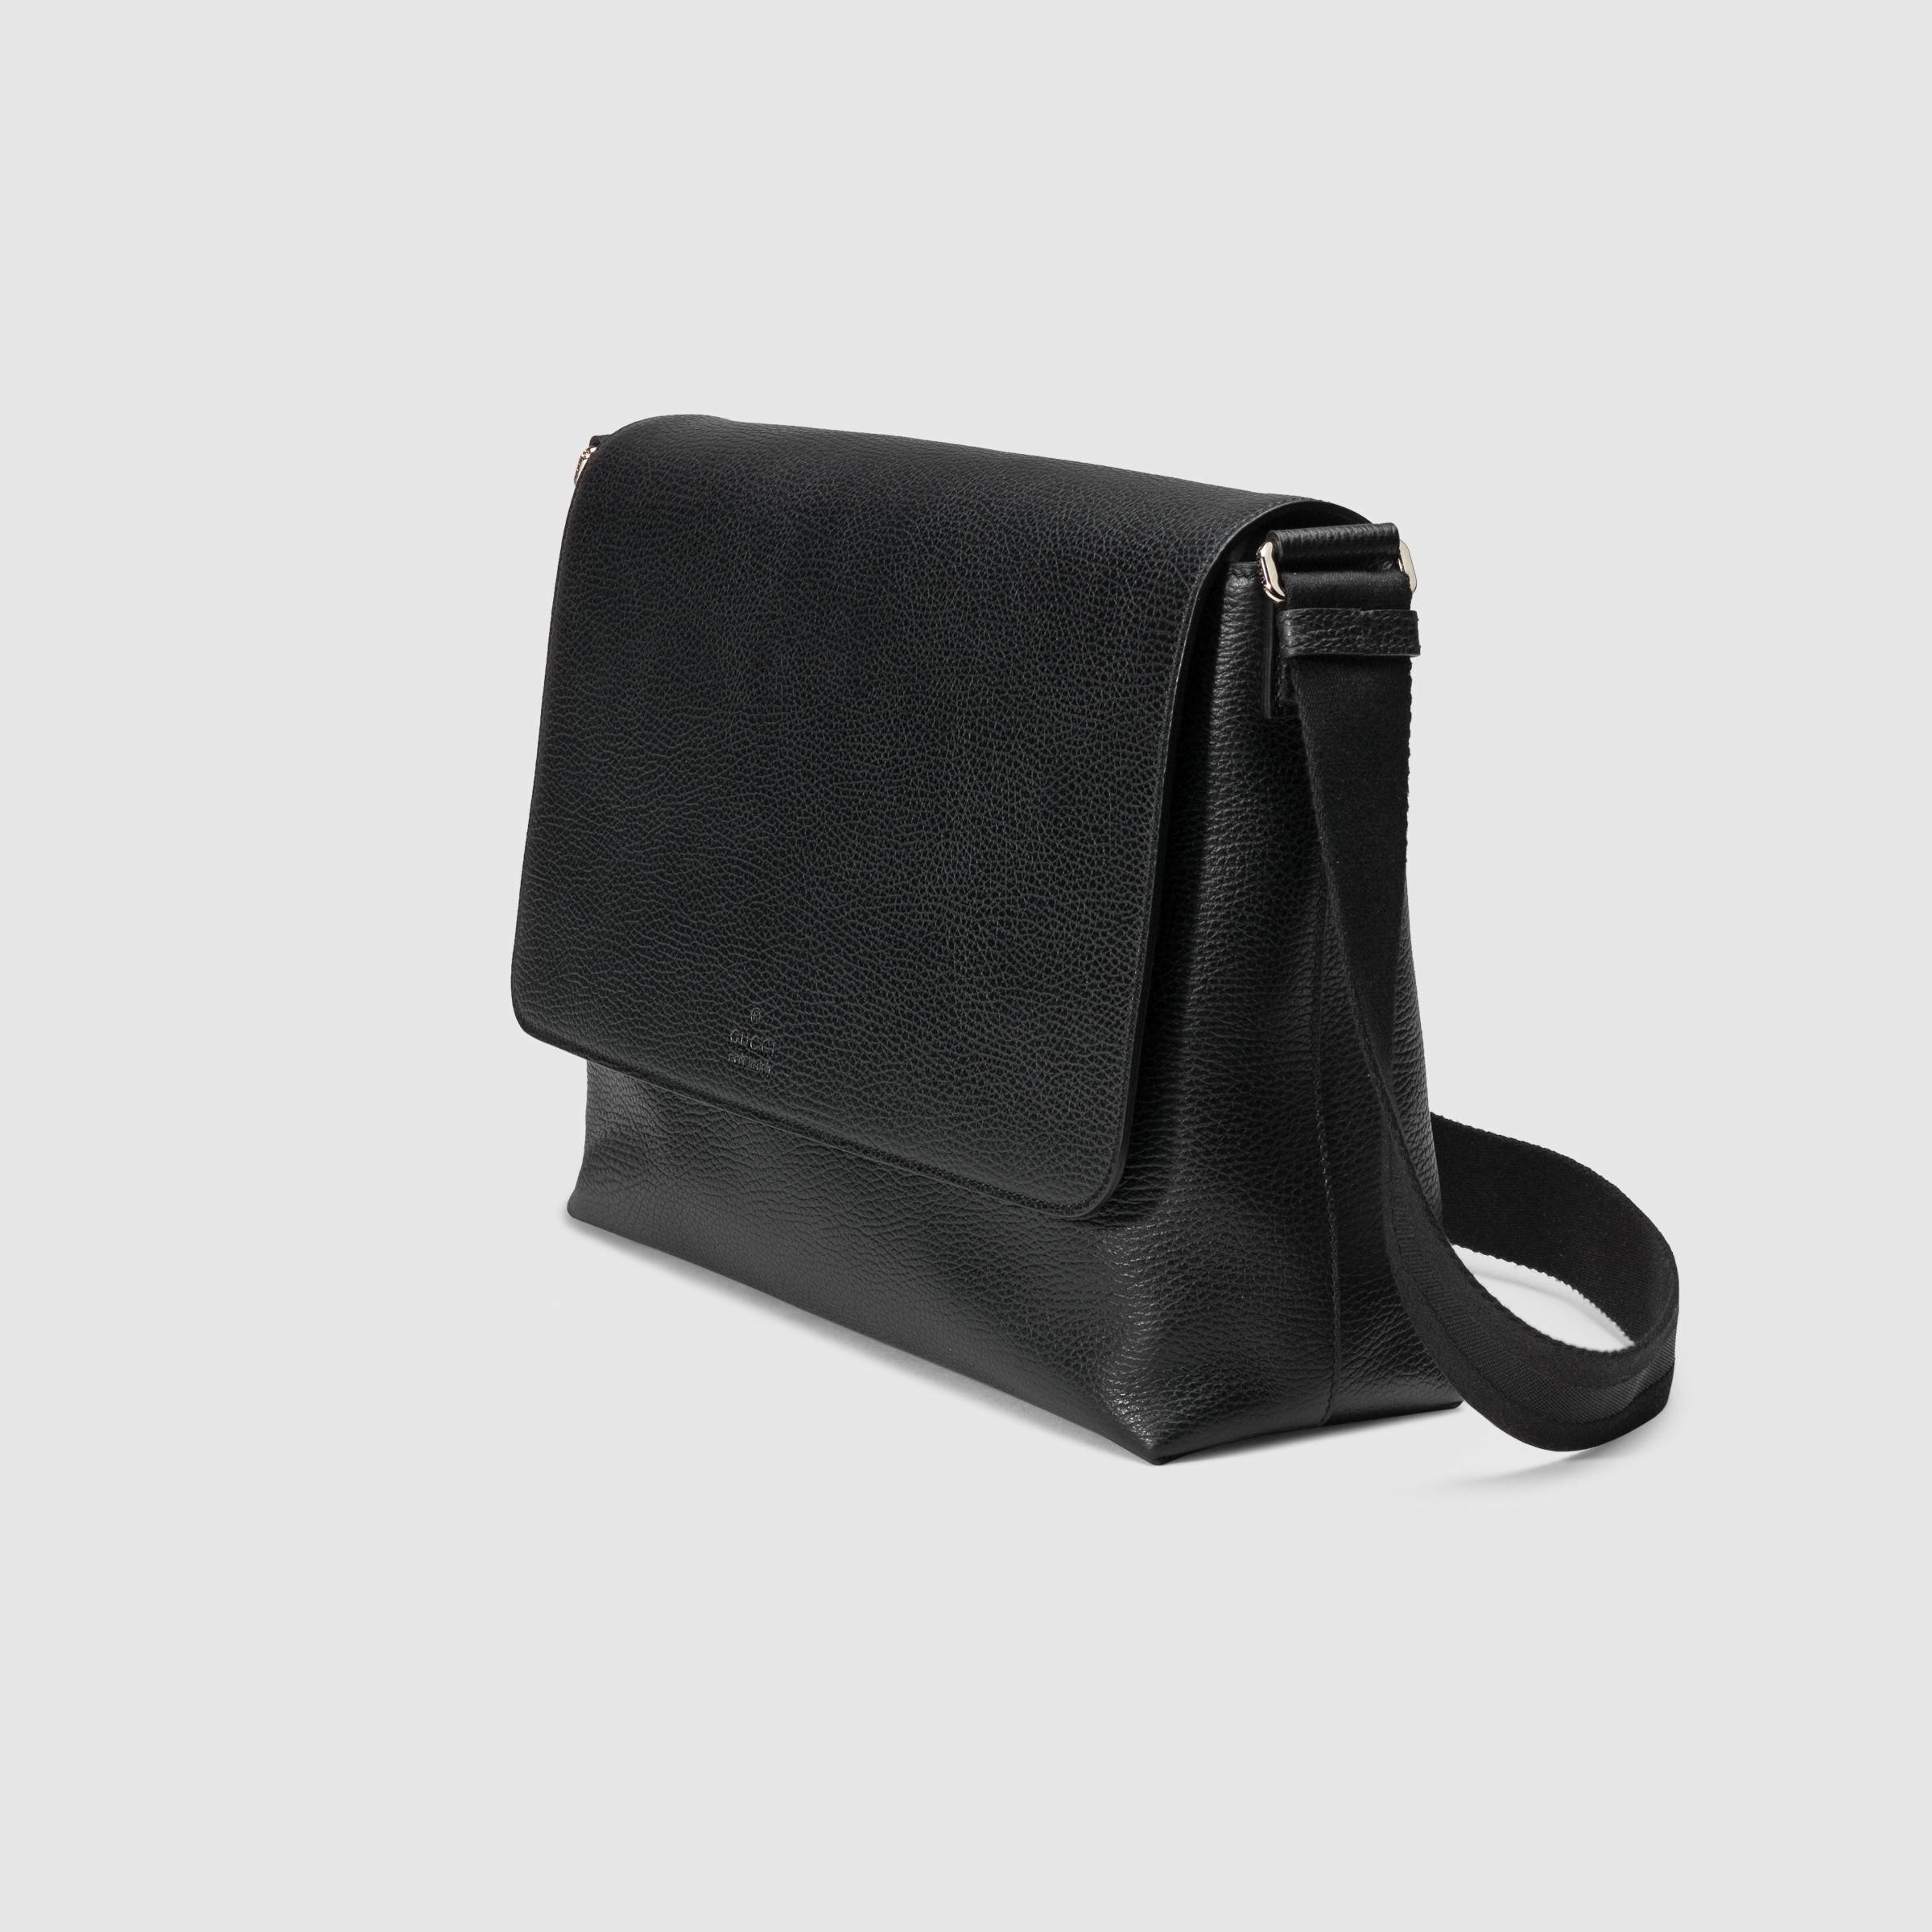 Gucci Leather Messenger Bag in Black 